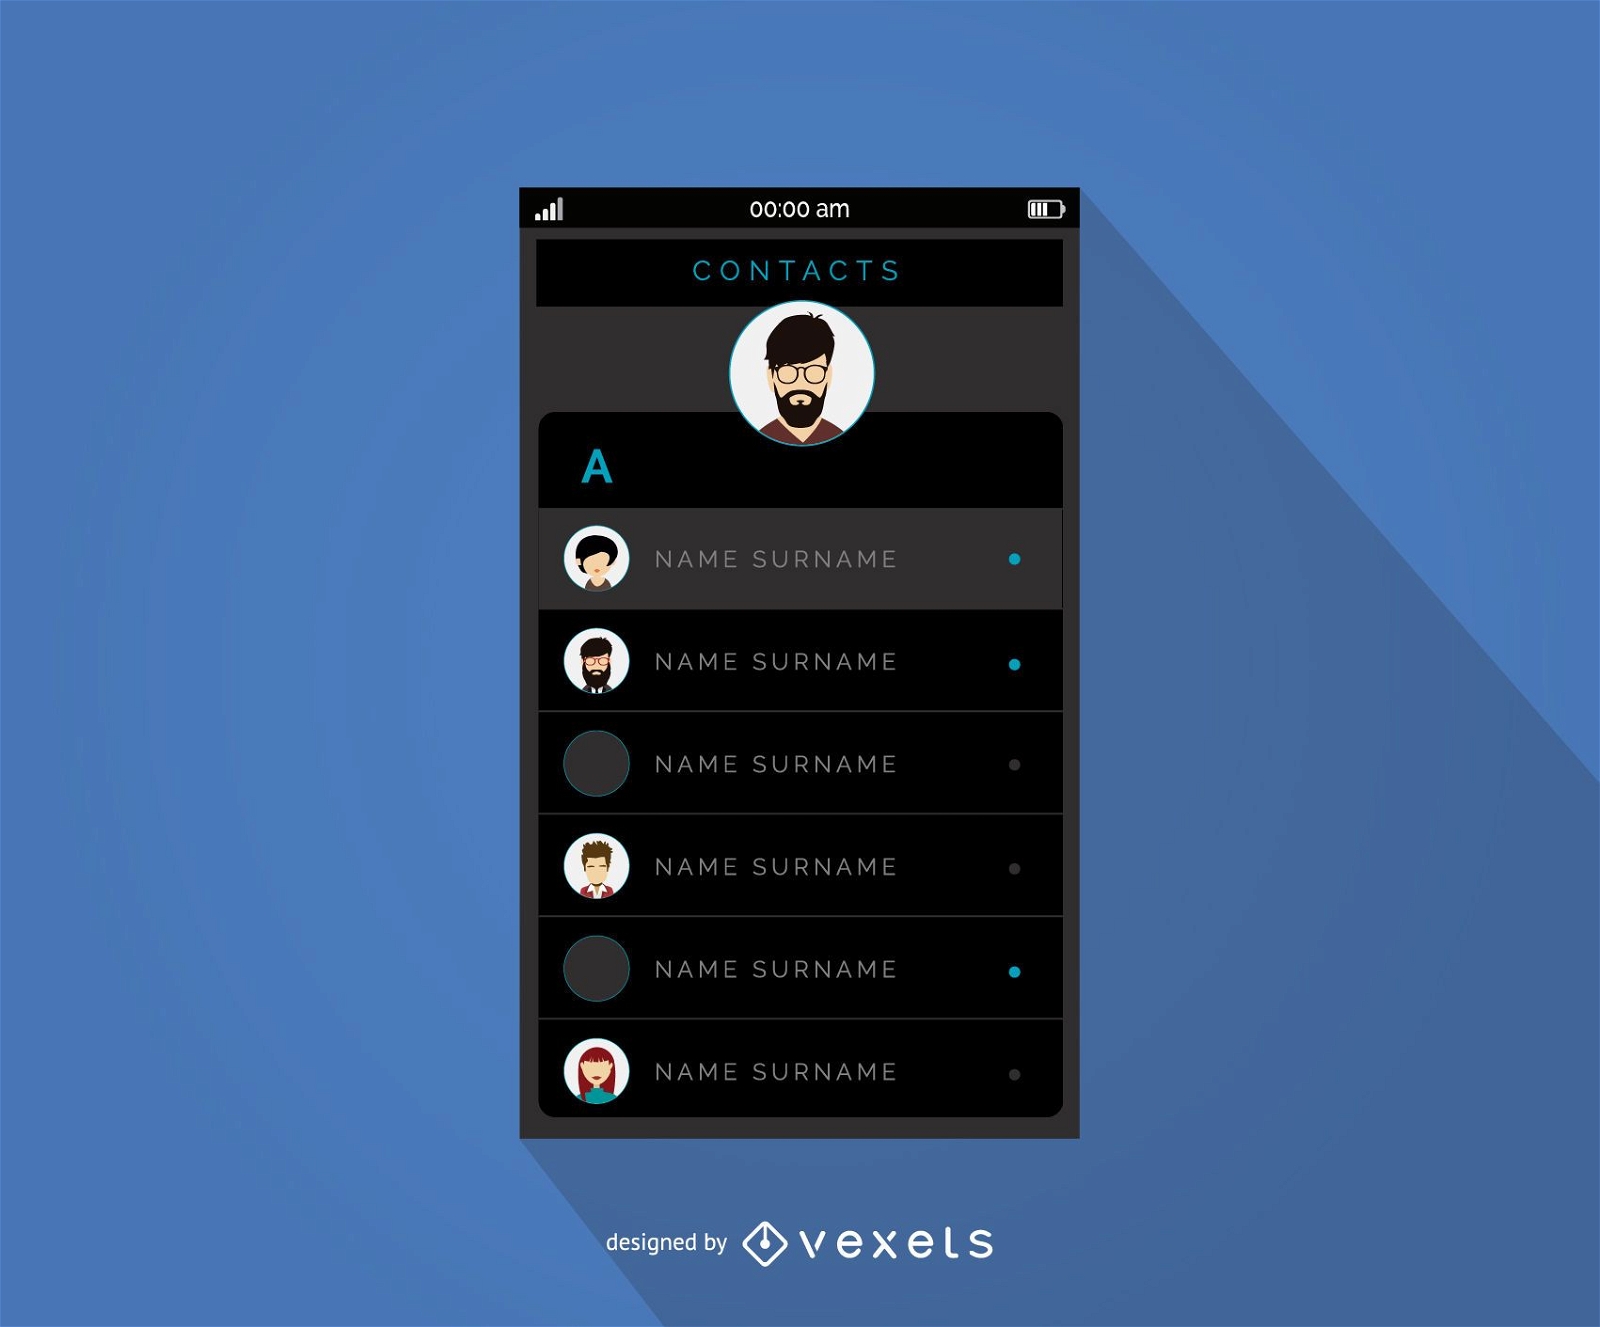 Mobile contacts menu interface design